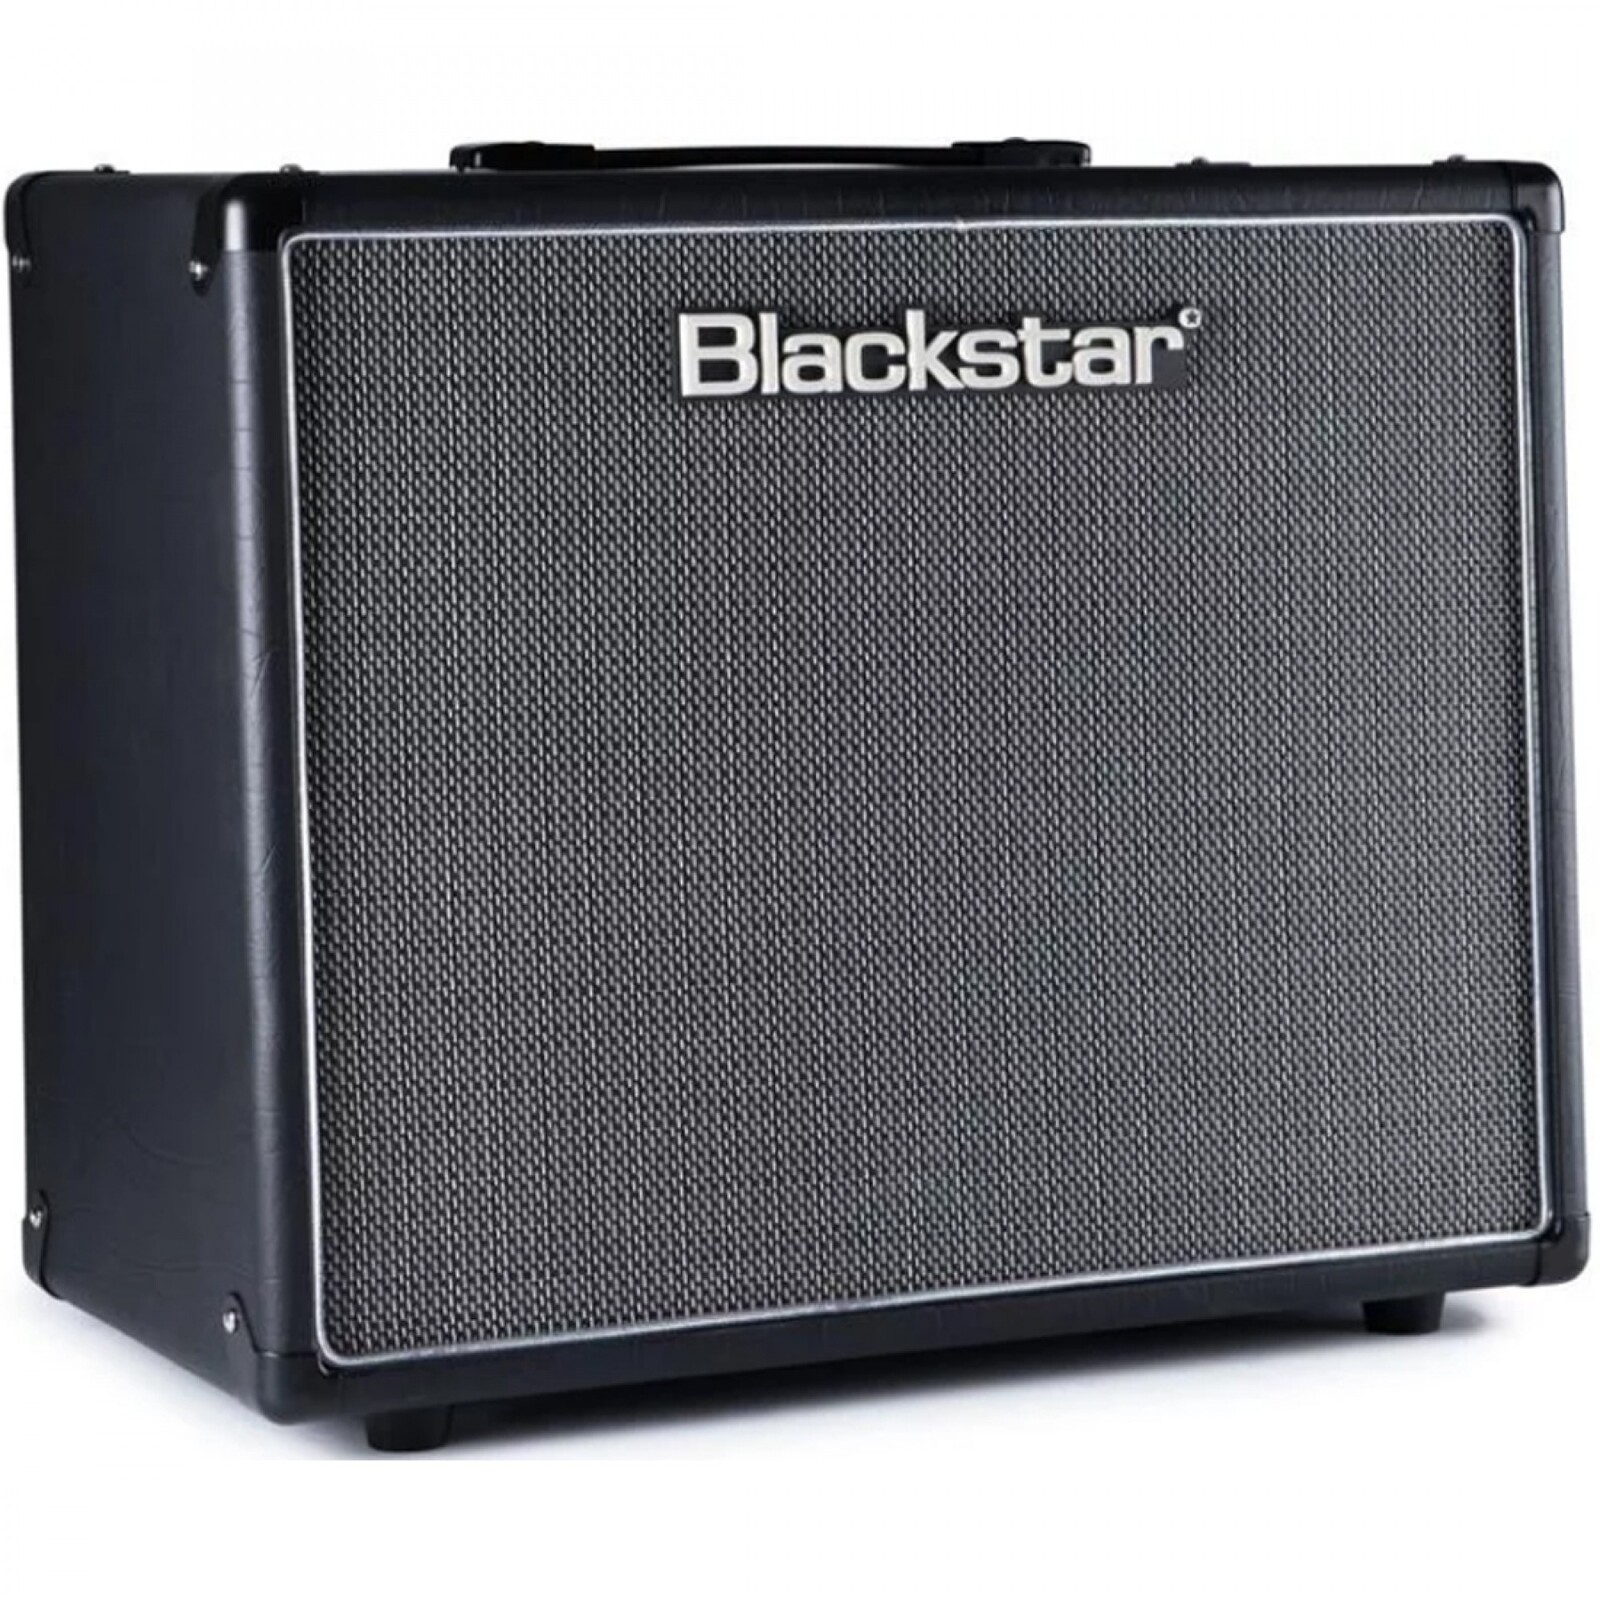 Blackstar Ht 112oc Mkii 1x12 80 Watt Speaker Cabinet